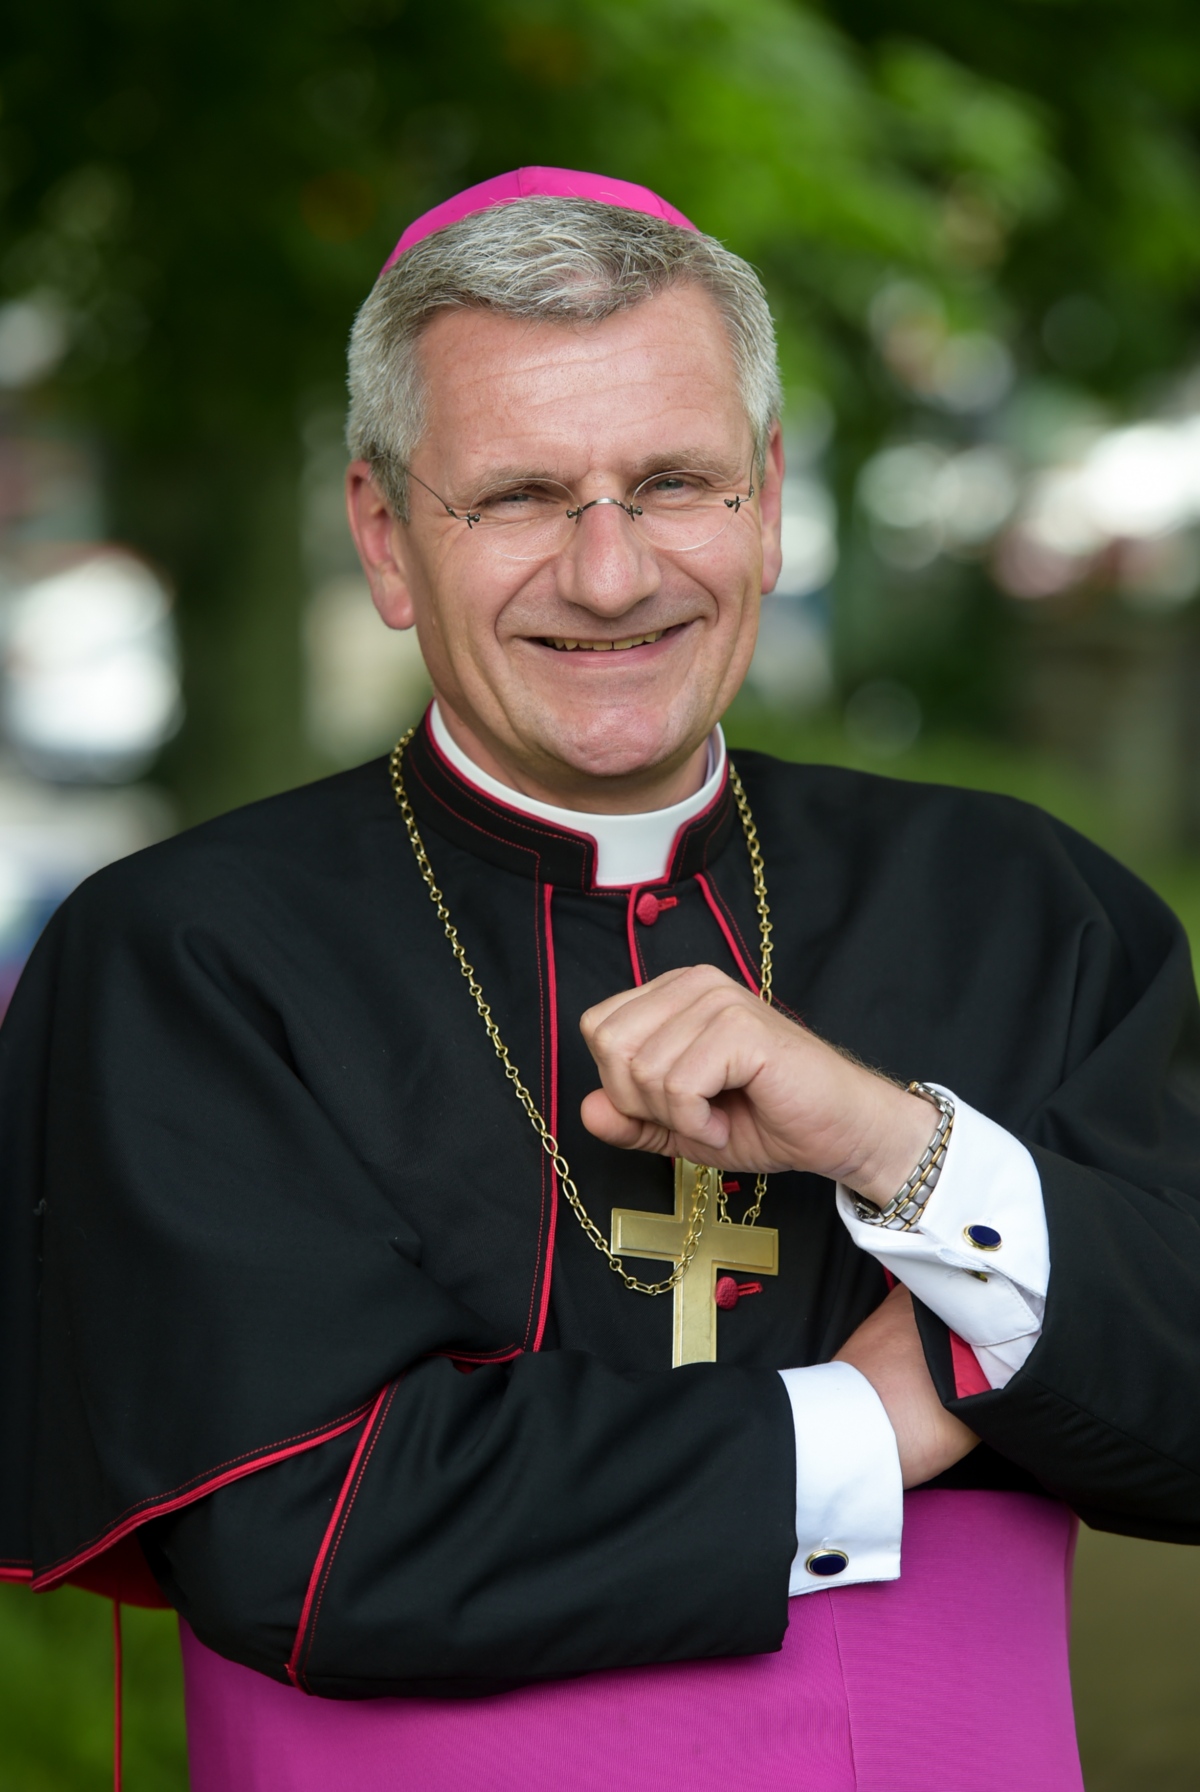 Weihbischof Dr. Dominikus Schwaderlapp